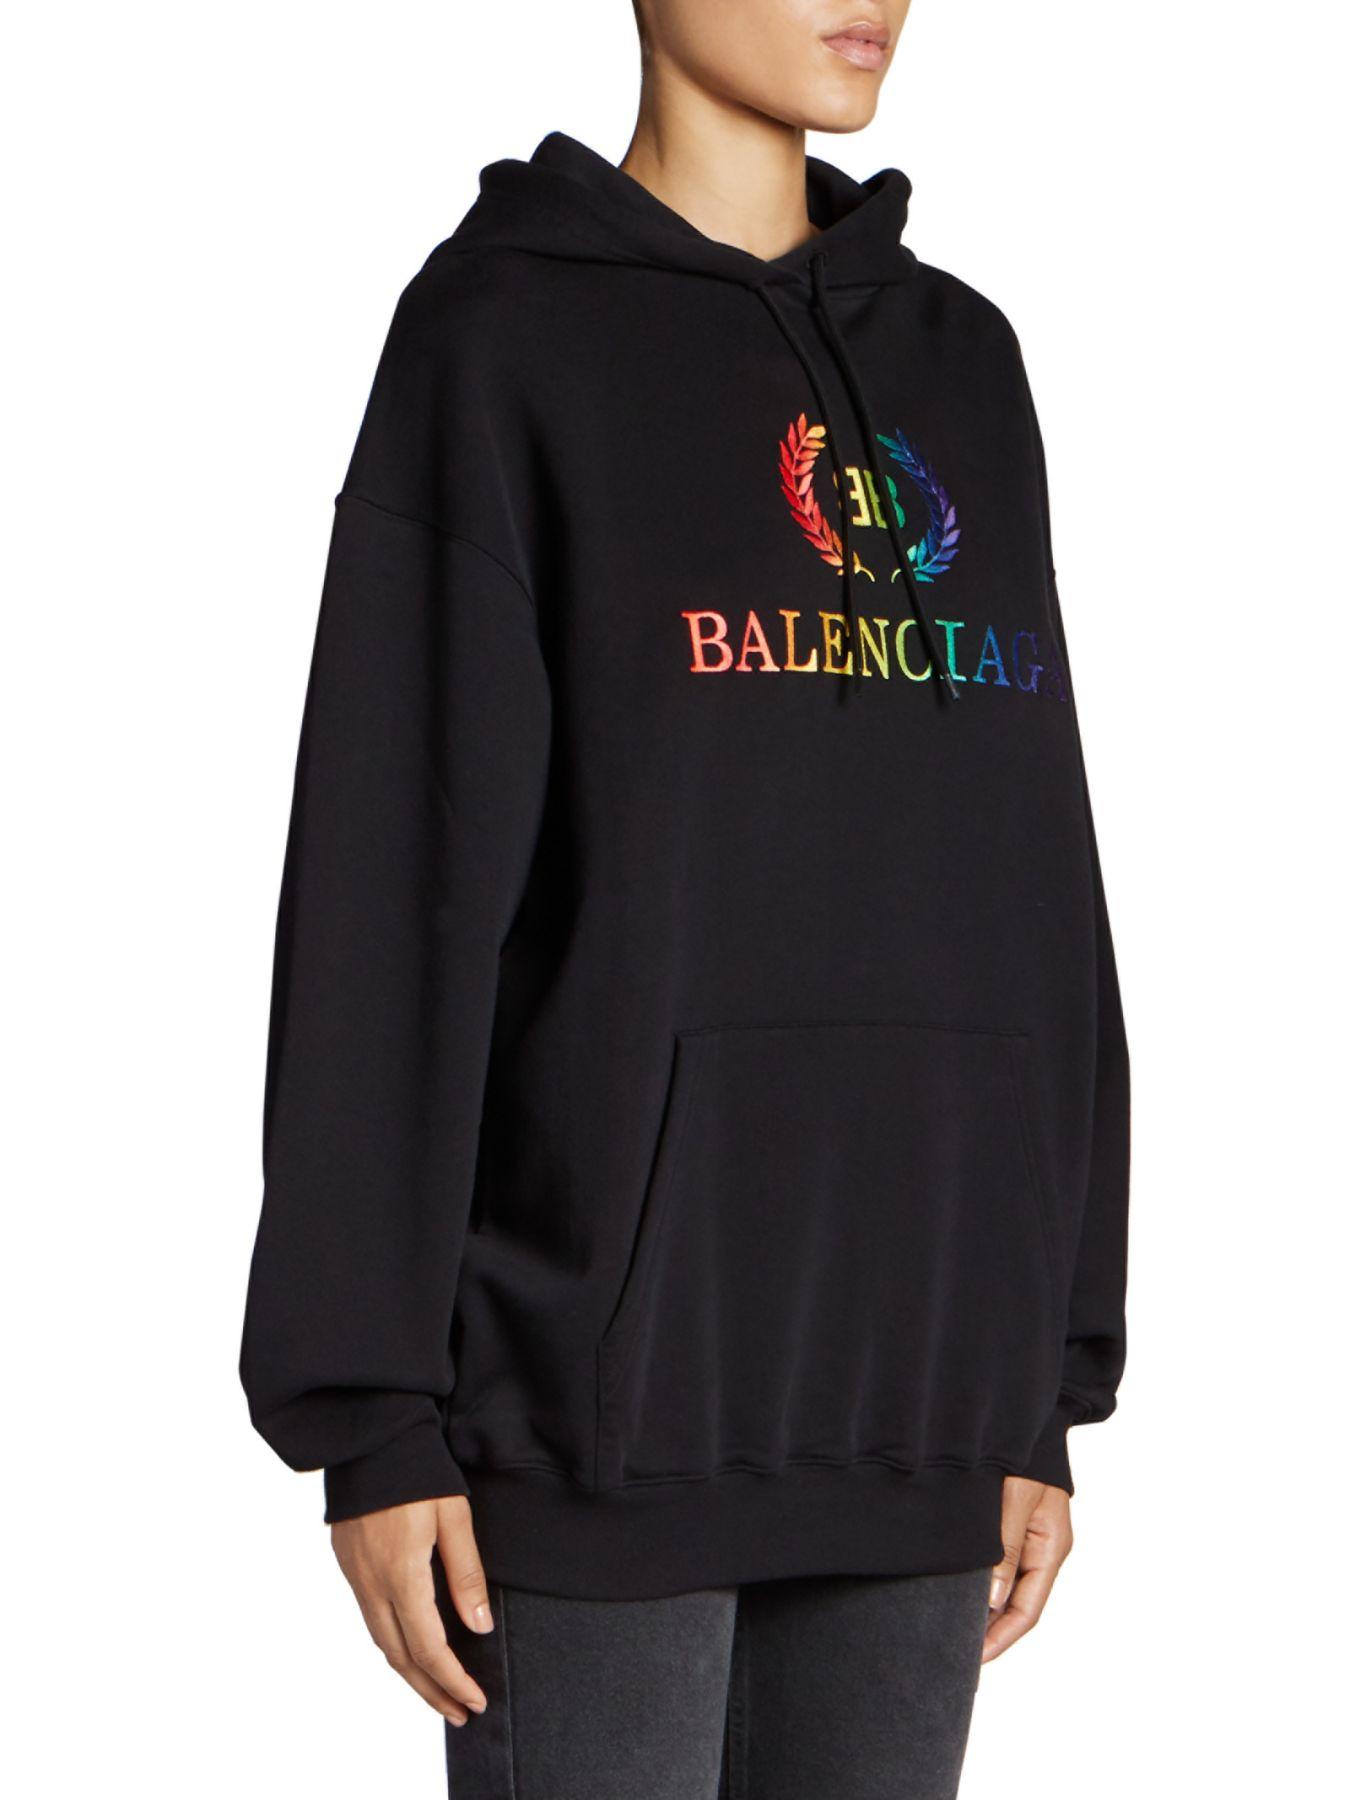 المؤهل مسح أخرج balenciaga rainbow hoodie mens - promarinedist.com